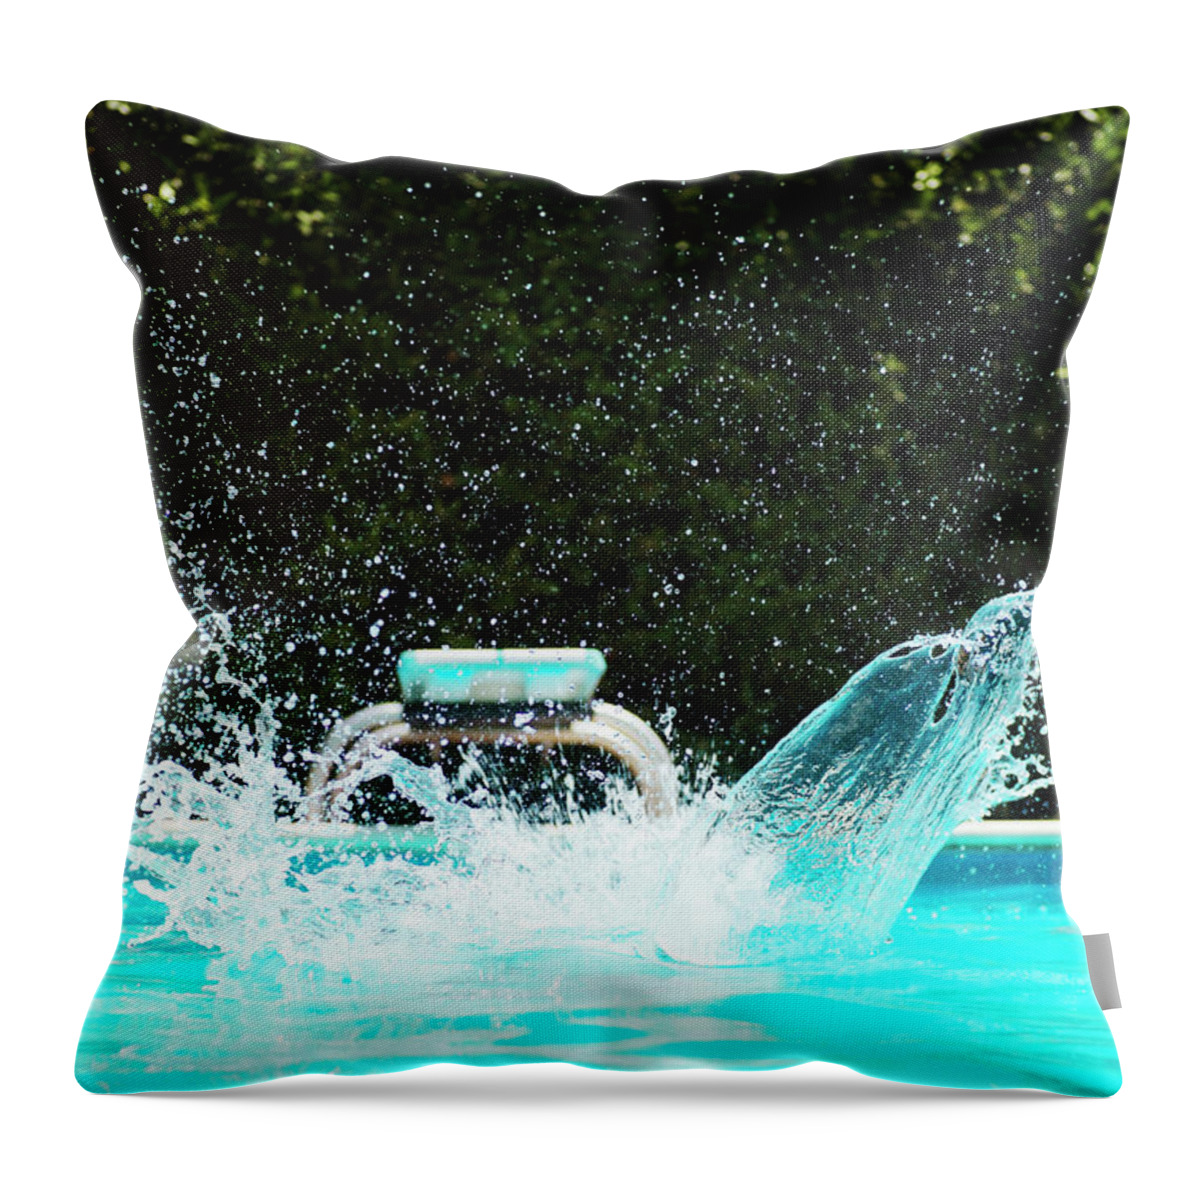 Swimming Pool Throw Pillow featuring the photograph Big Splash In Swimming Pool by Henrik Sorensen